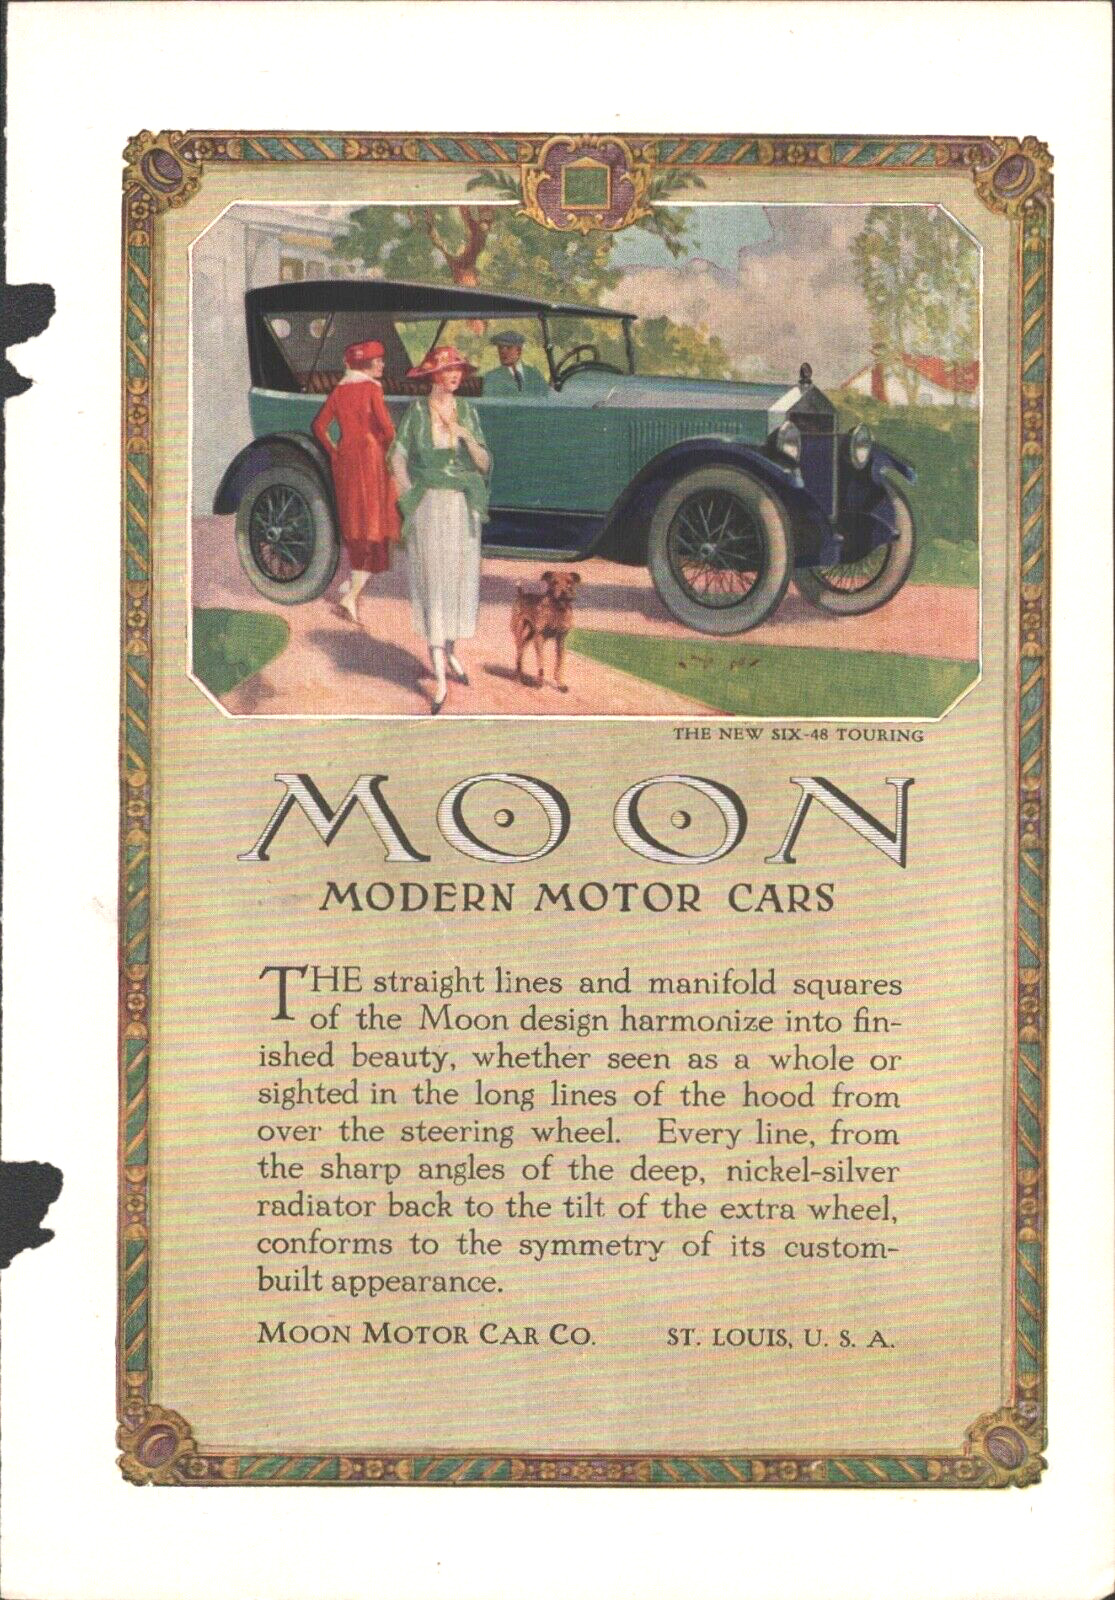 1920 MOON MOTOR CAR CO. antique magazine advertisement SIX-48 TOURING AUTOMOBILE